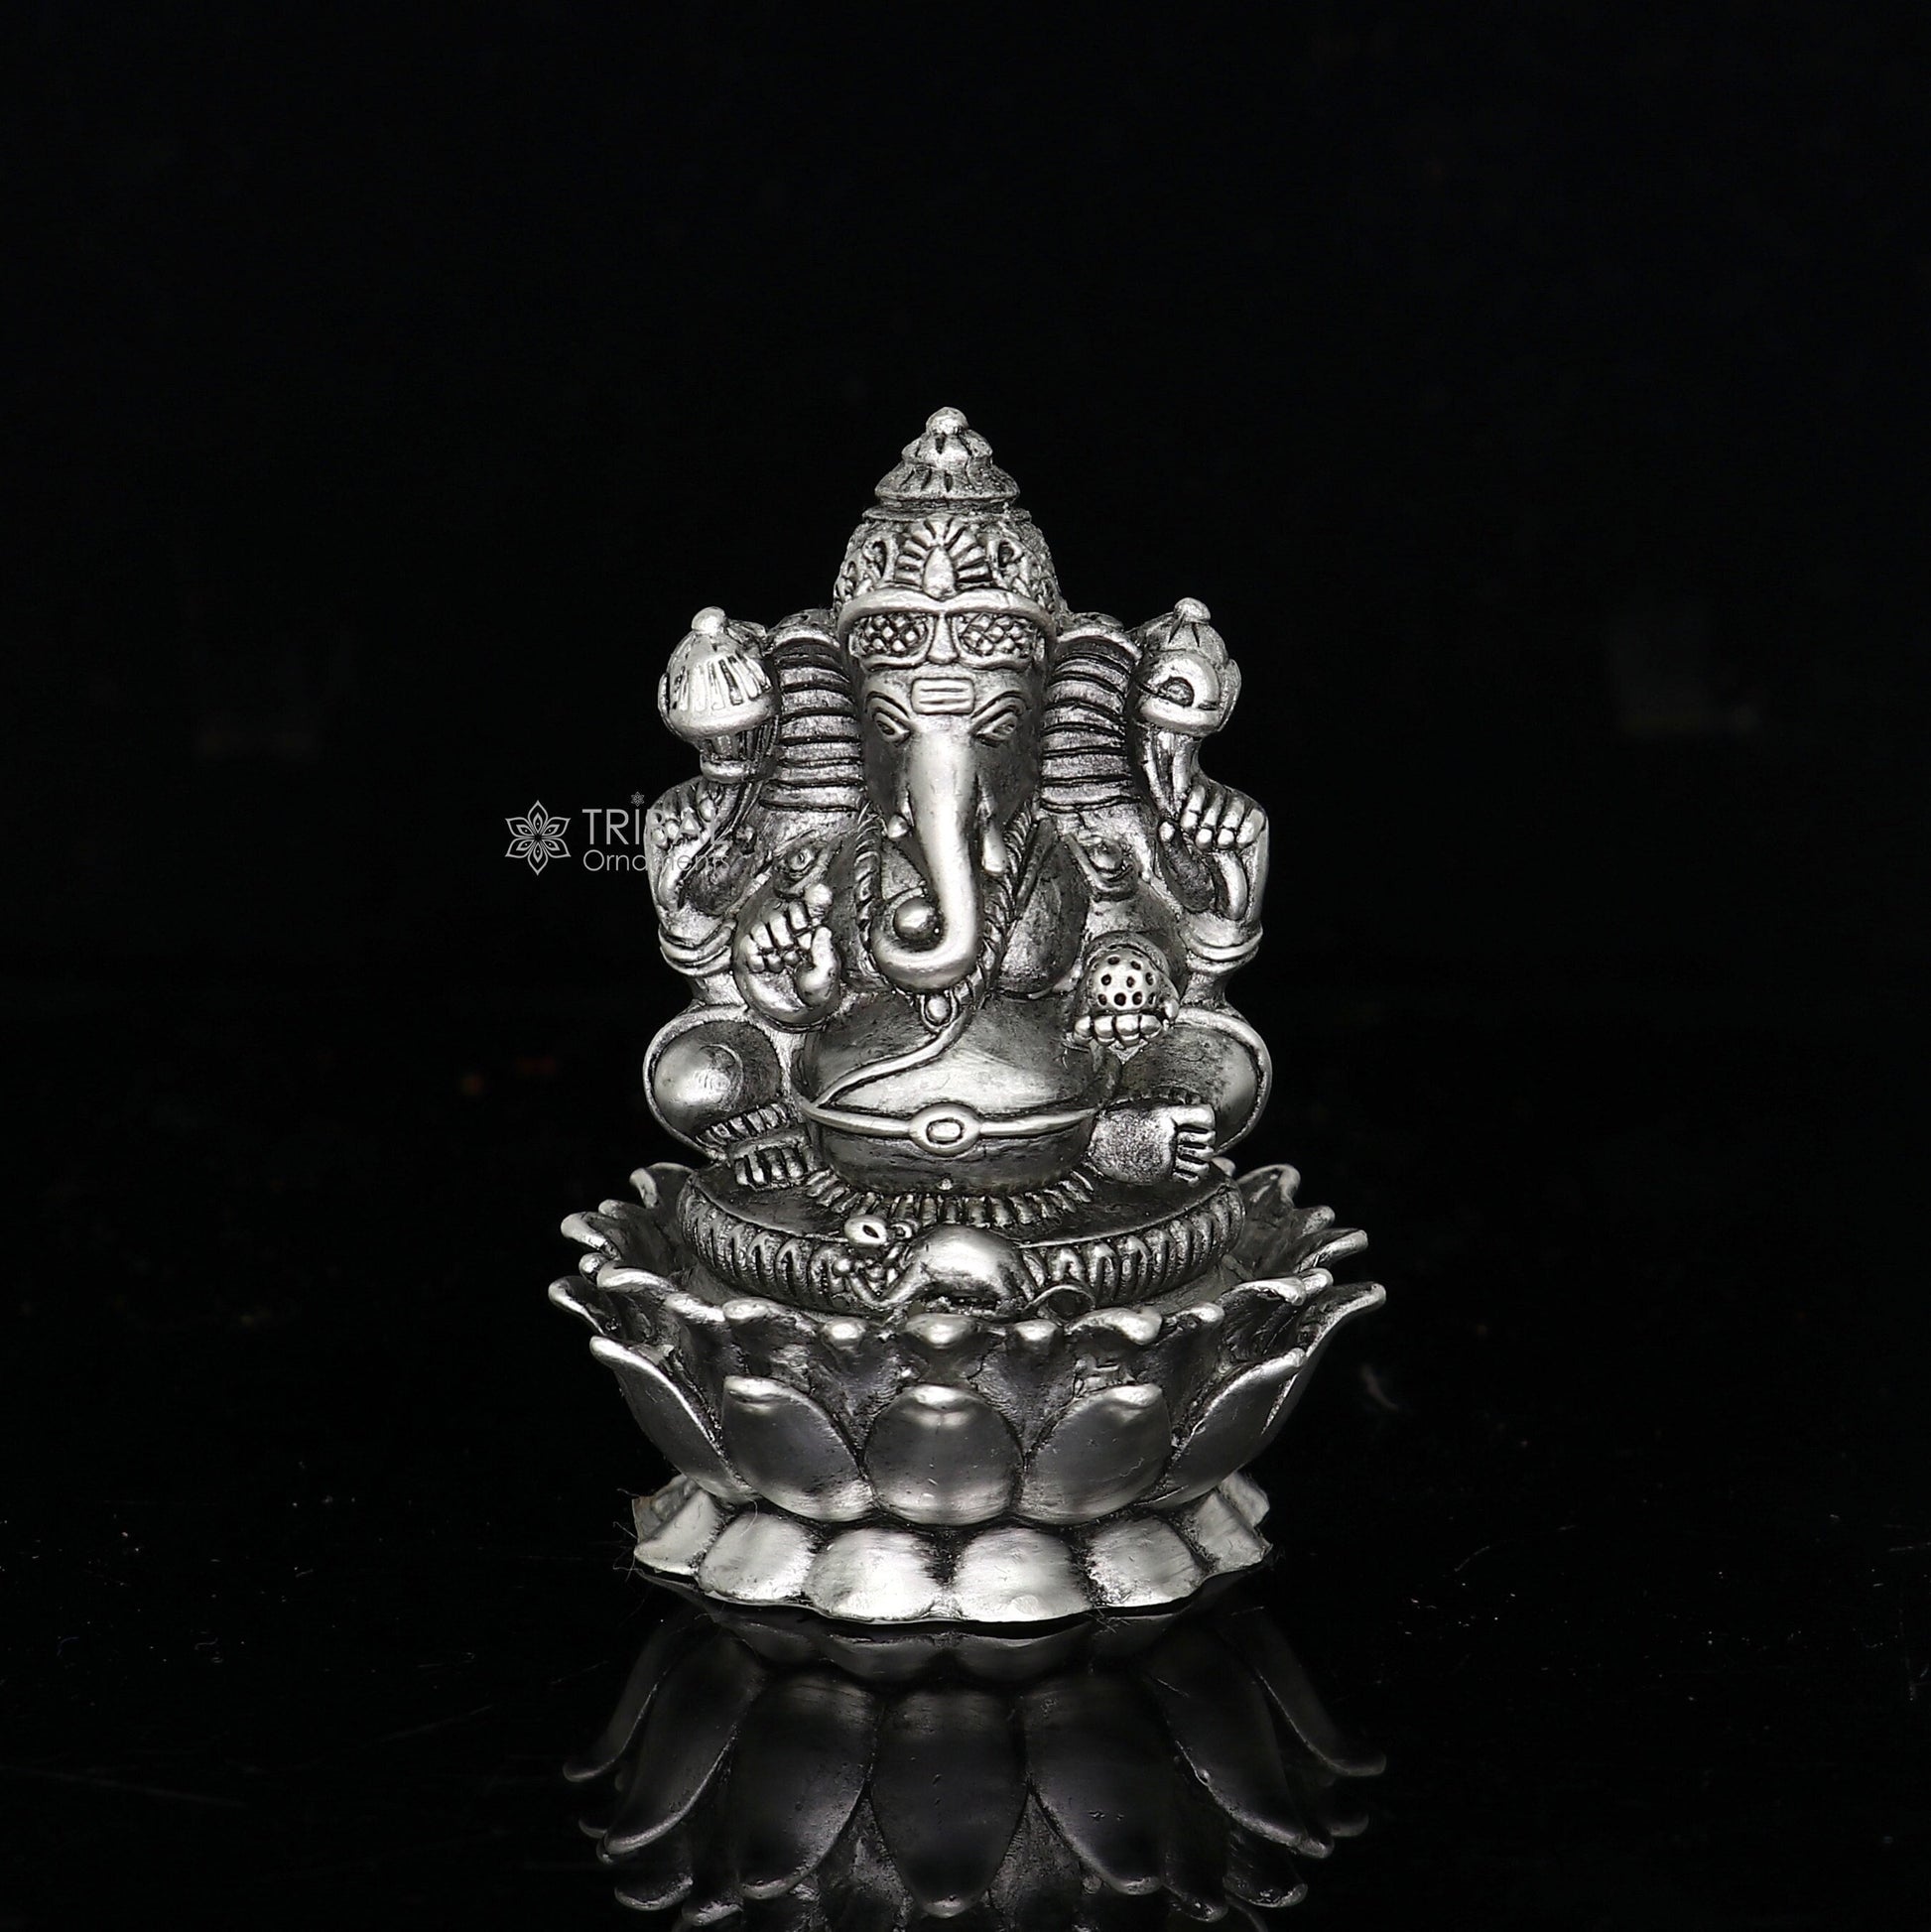 925 Sterling silver Lord Ganesh Idol, Pooja Articles, Silver Idols Figurine, handcrafted Ganesha statue sculpture Diwali puja gift art668 - TRIBAL ORNAMENTS